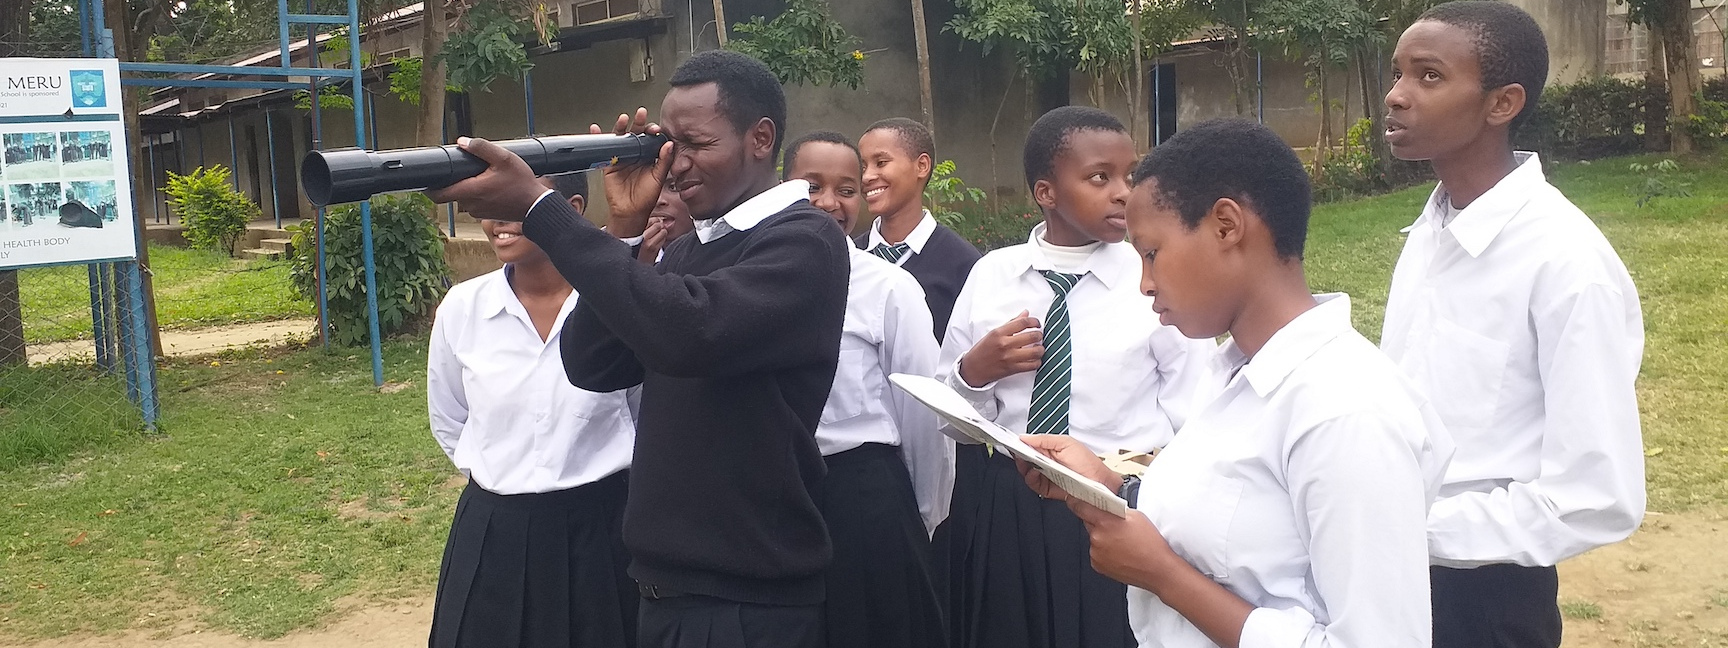 Students use a new Galileoscope telescope at Makumira school, Meru District, Tanzania